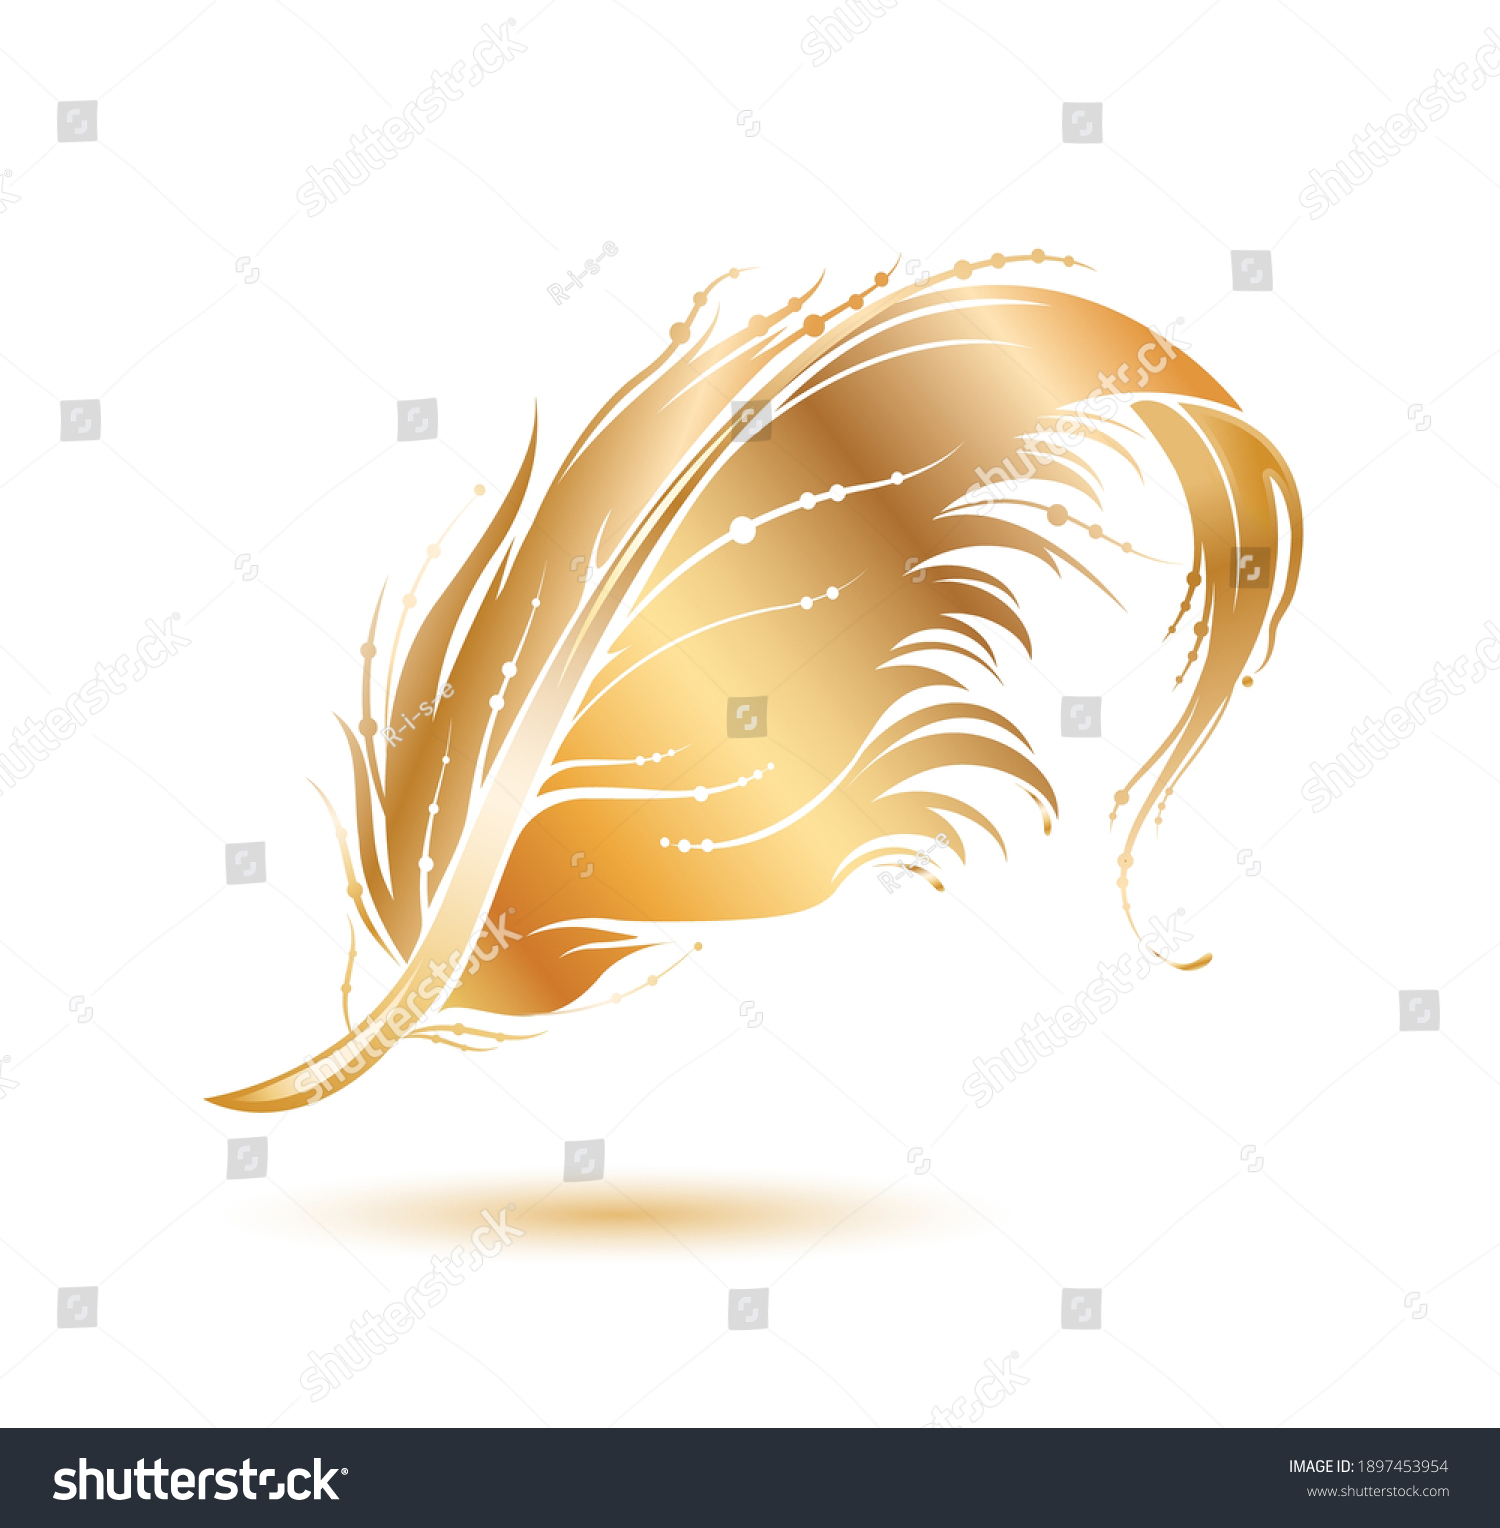 4,030 Gold Phoenix Bird Illustration Images, Stock Photos & Vectors ...